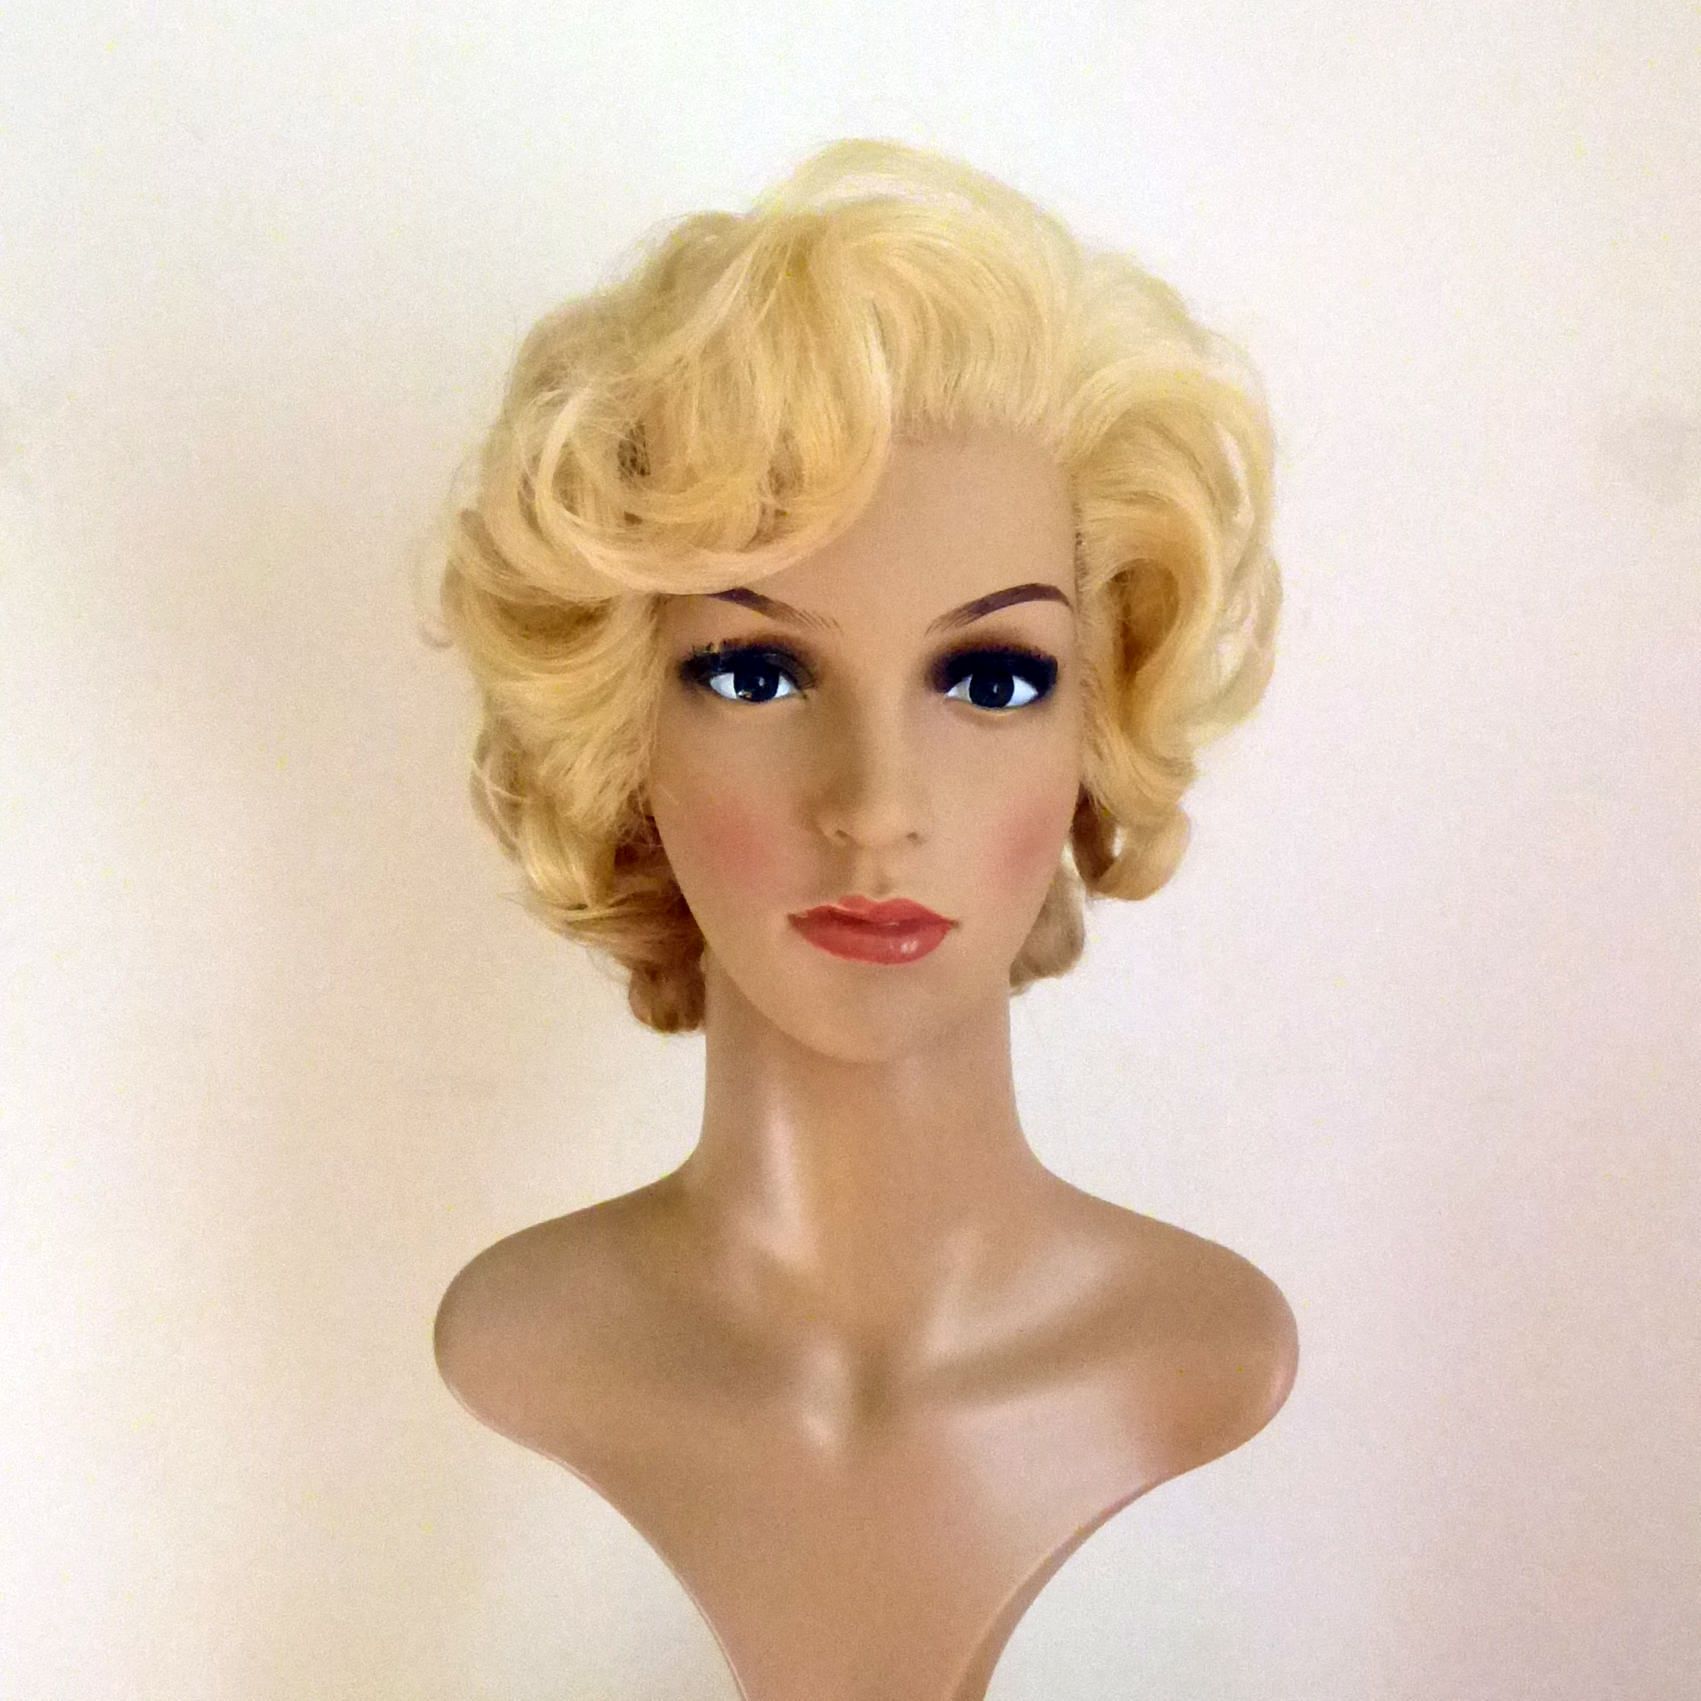 Hellblonde Damenperücke auf Perückenkopf im Stil Marilyn Monroe